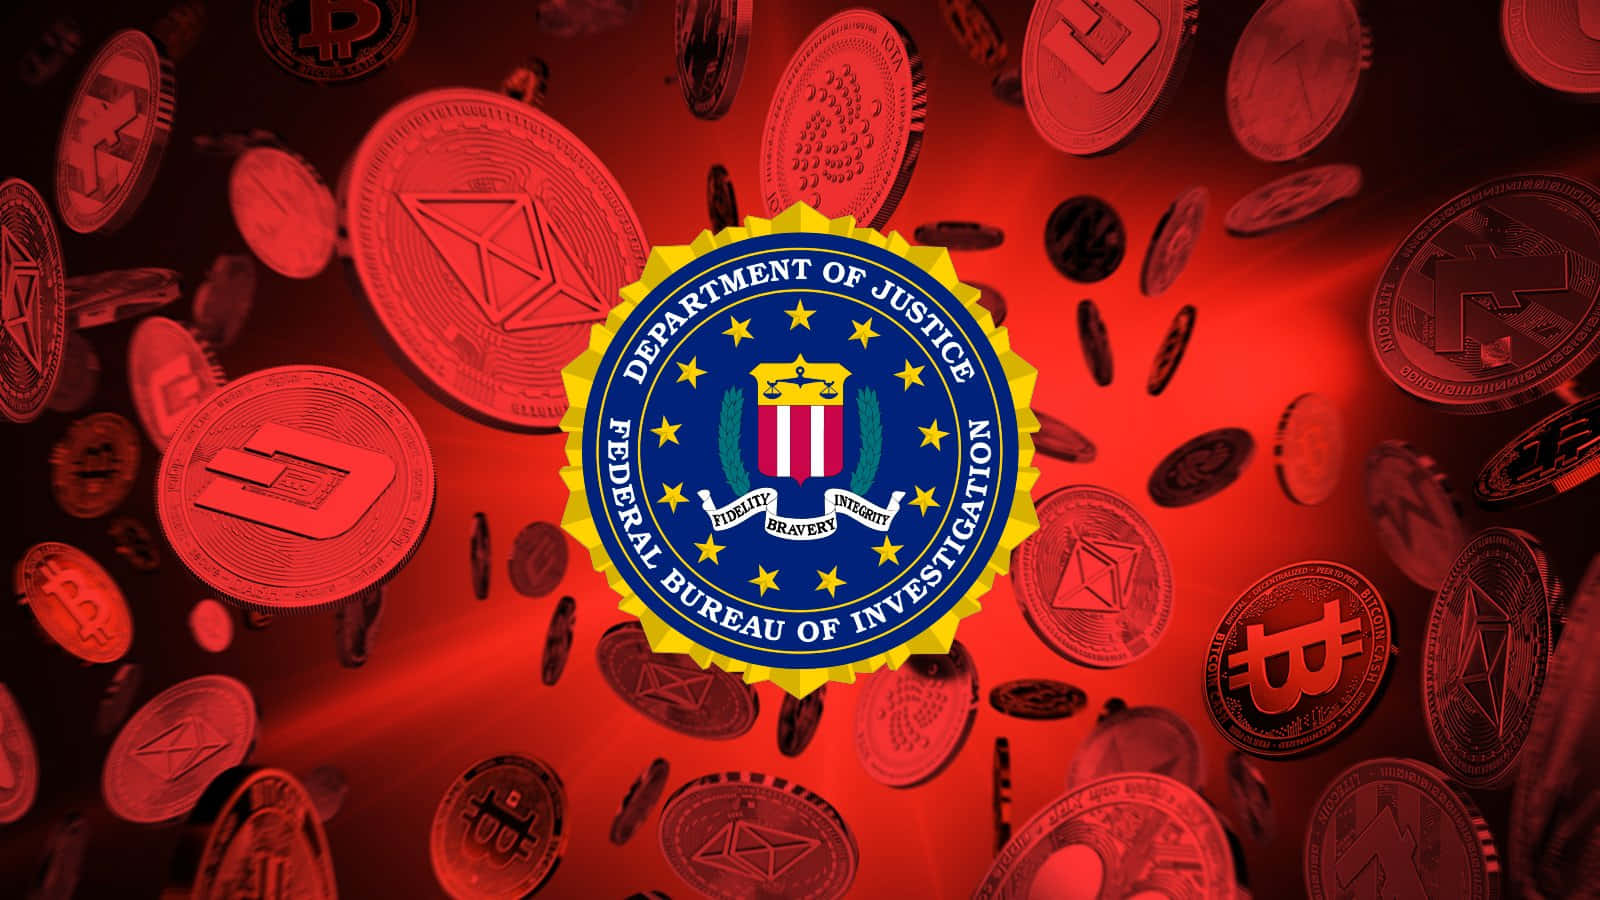 FBI emblem and motto on a dark background